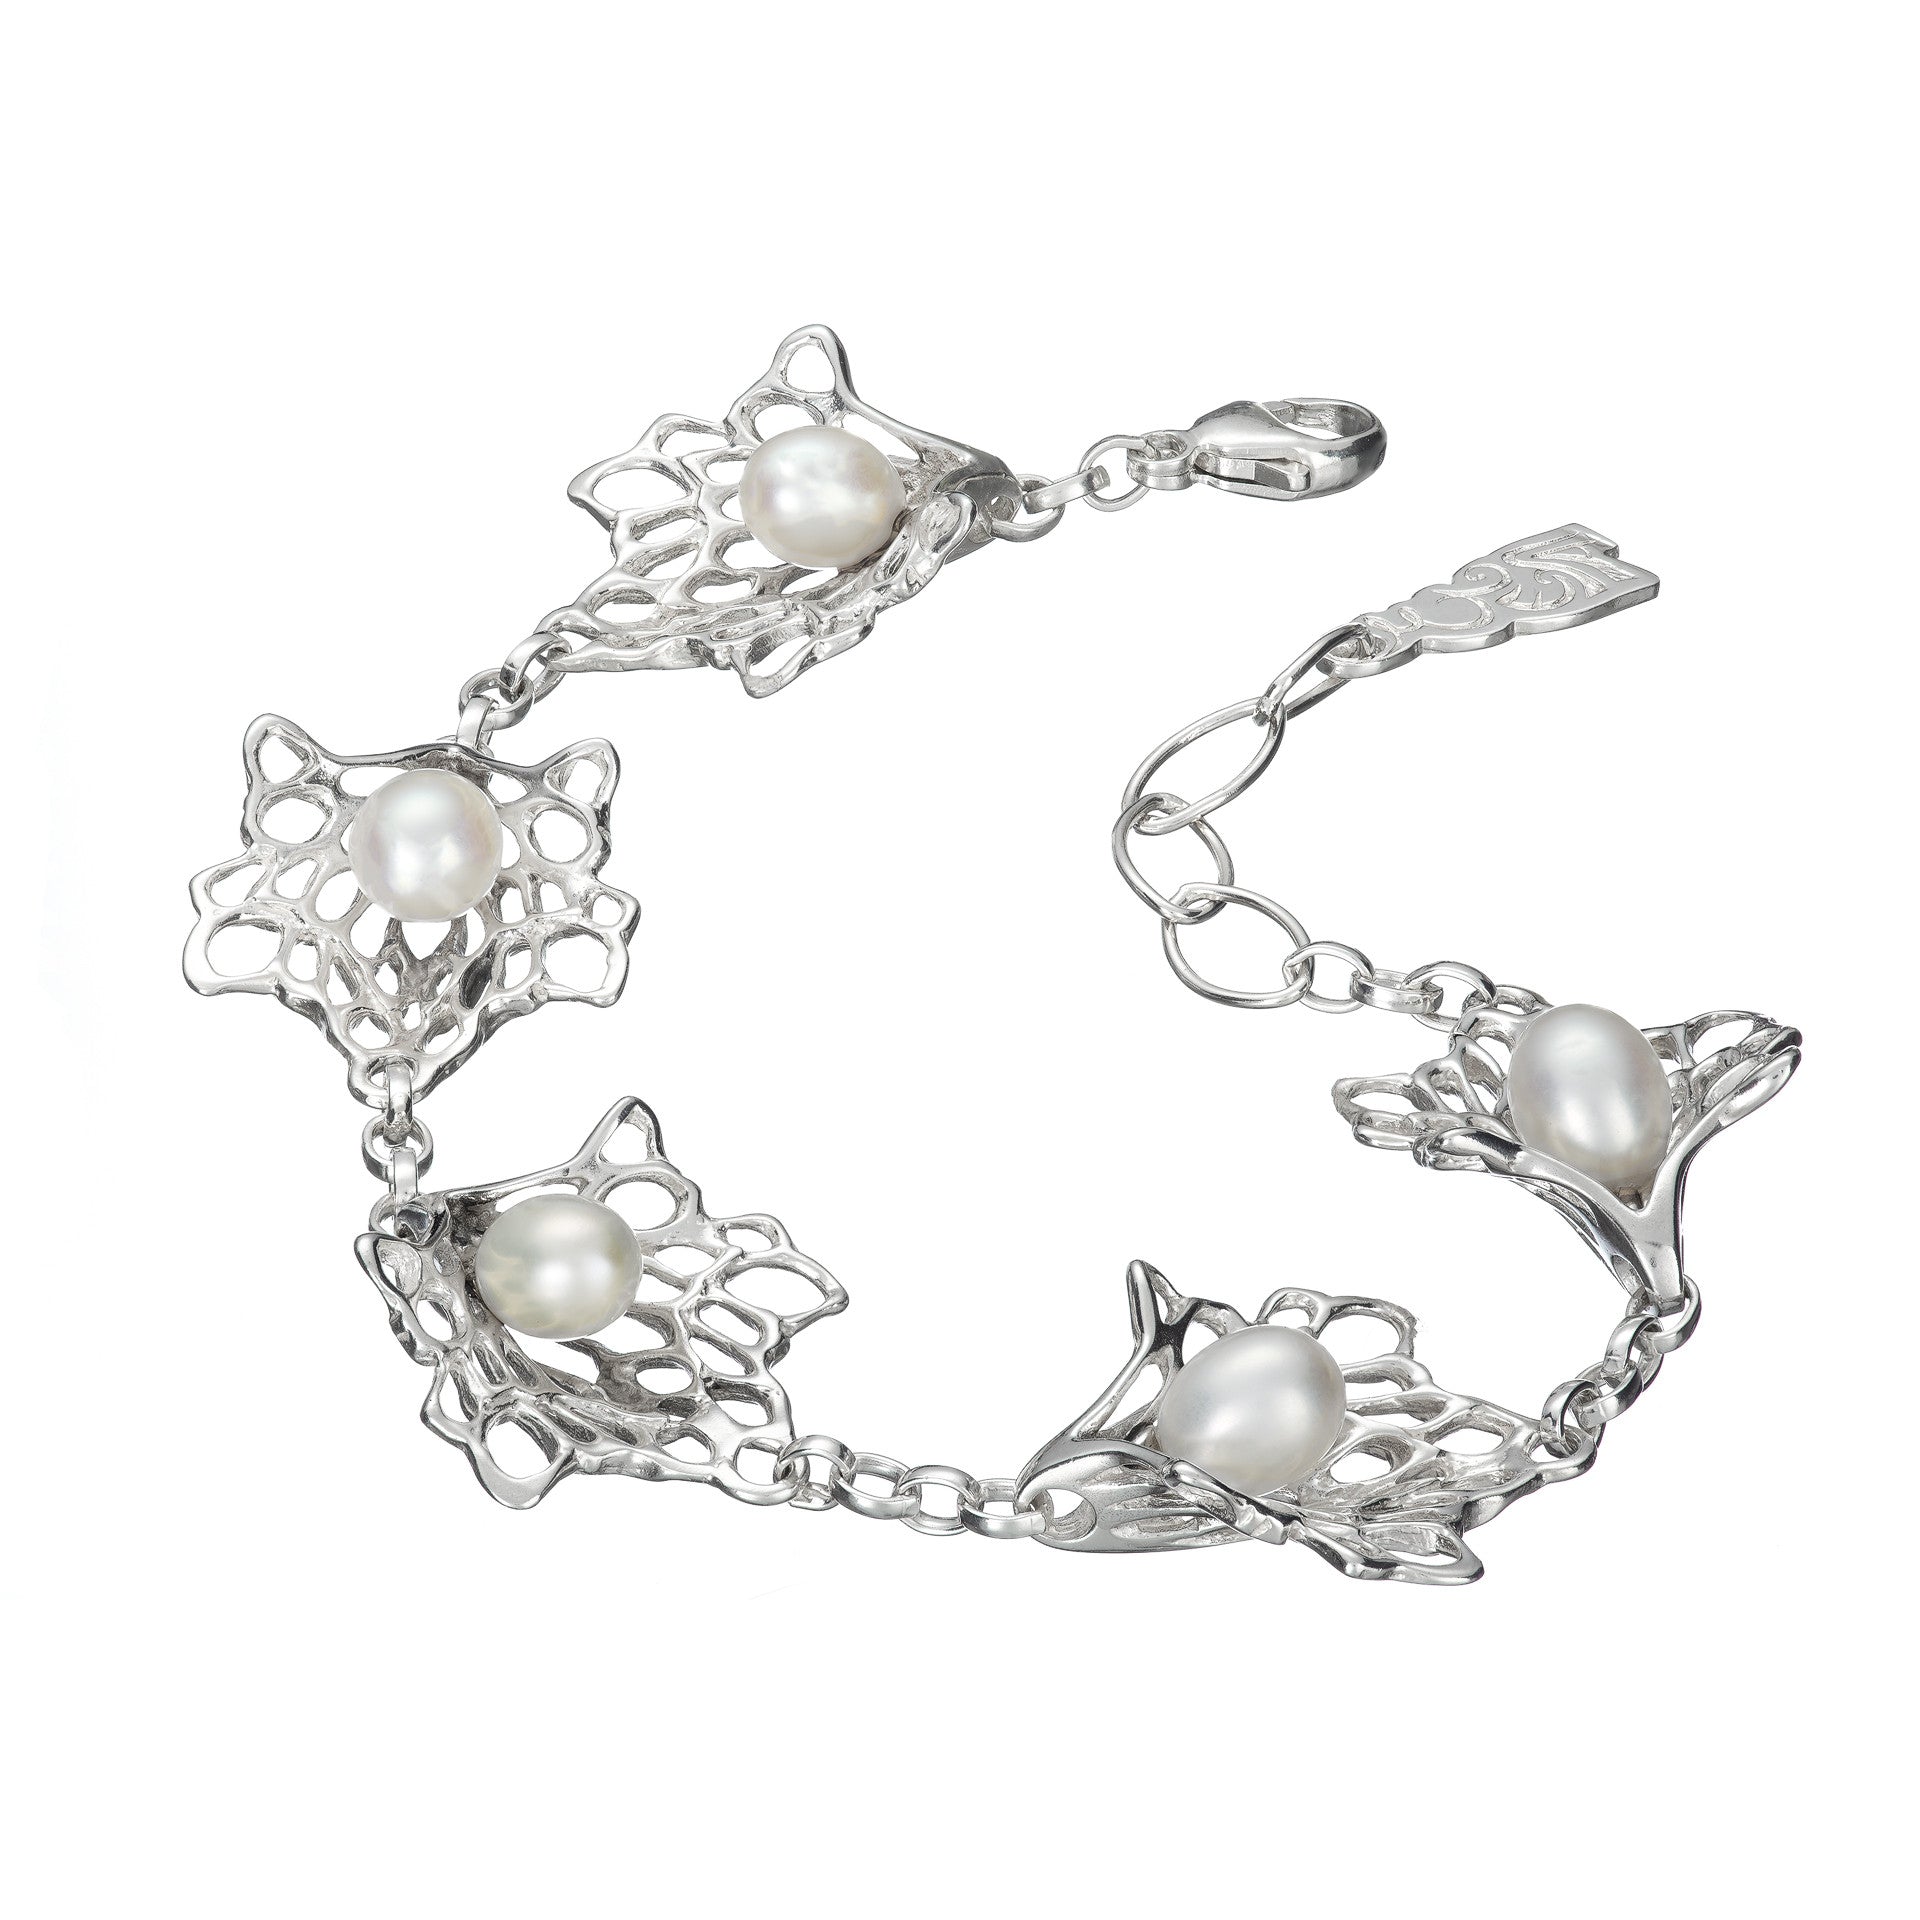 Petals and pearls gossamer flower bracelet, designed and handmade in Ireland by Elena Brennan.